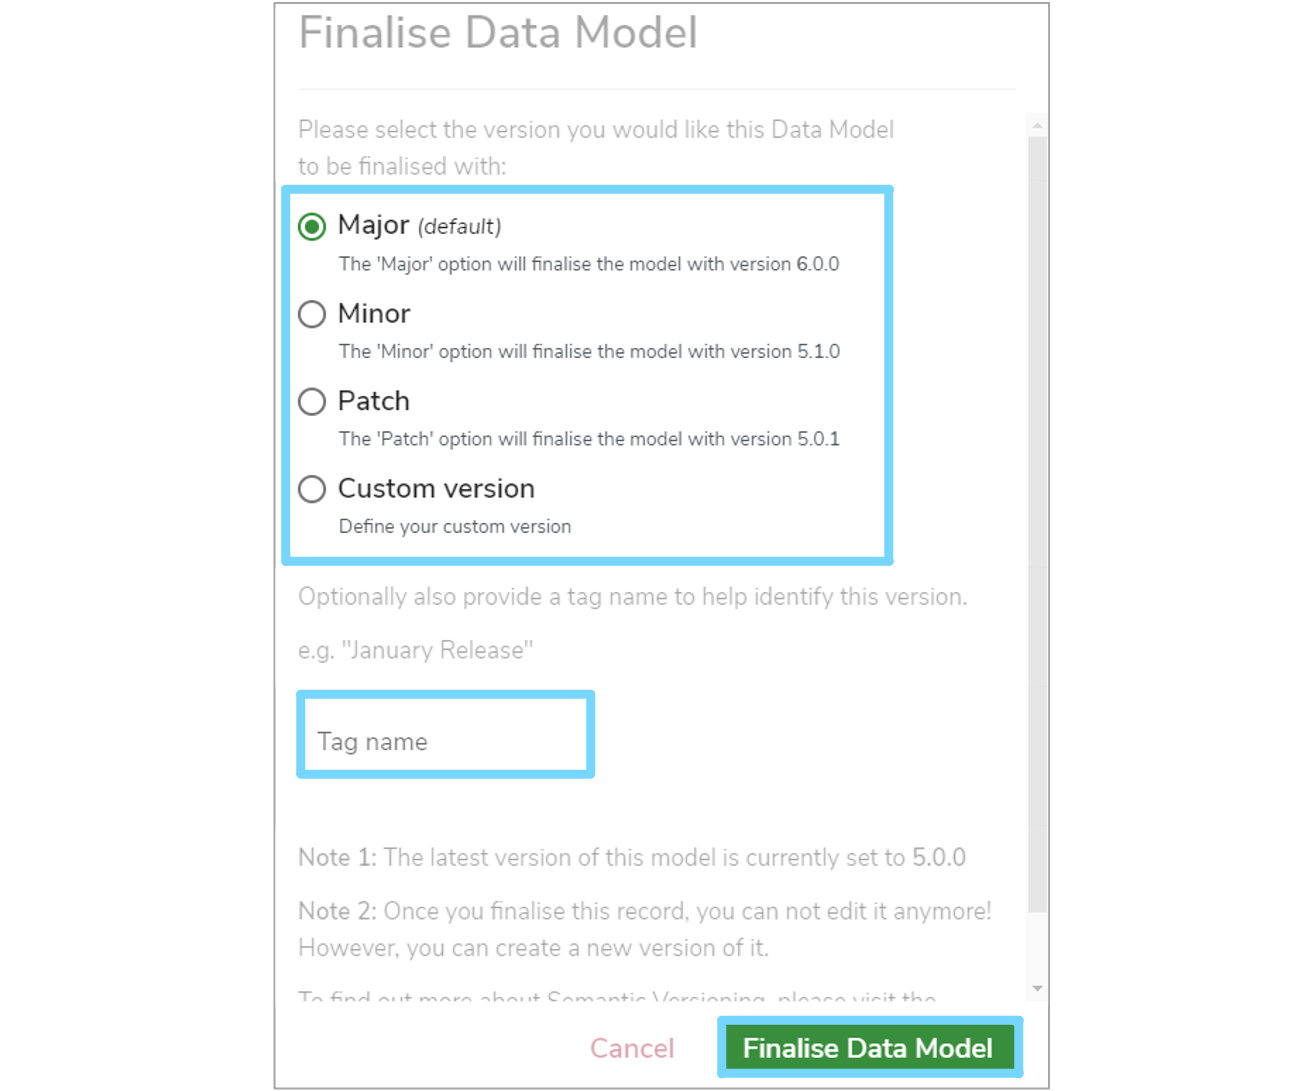 Finalise Data Model form